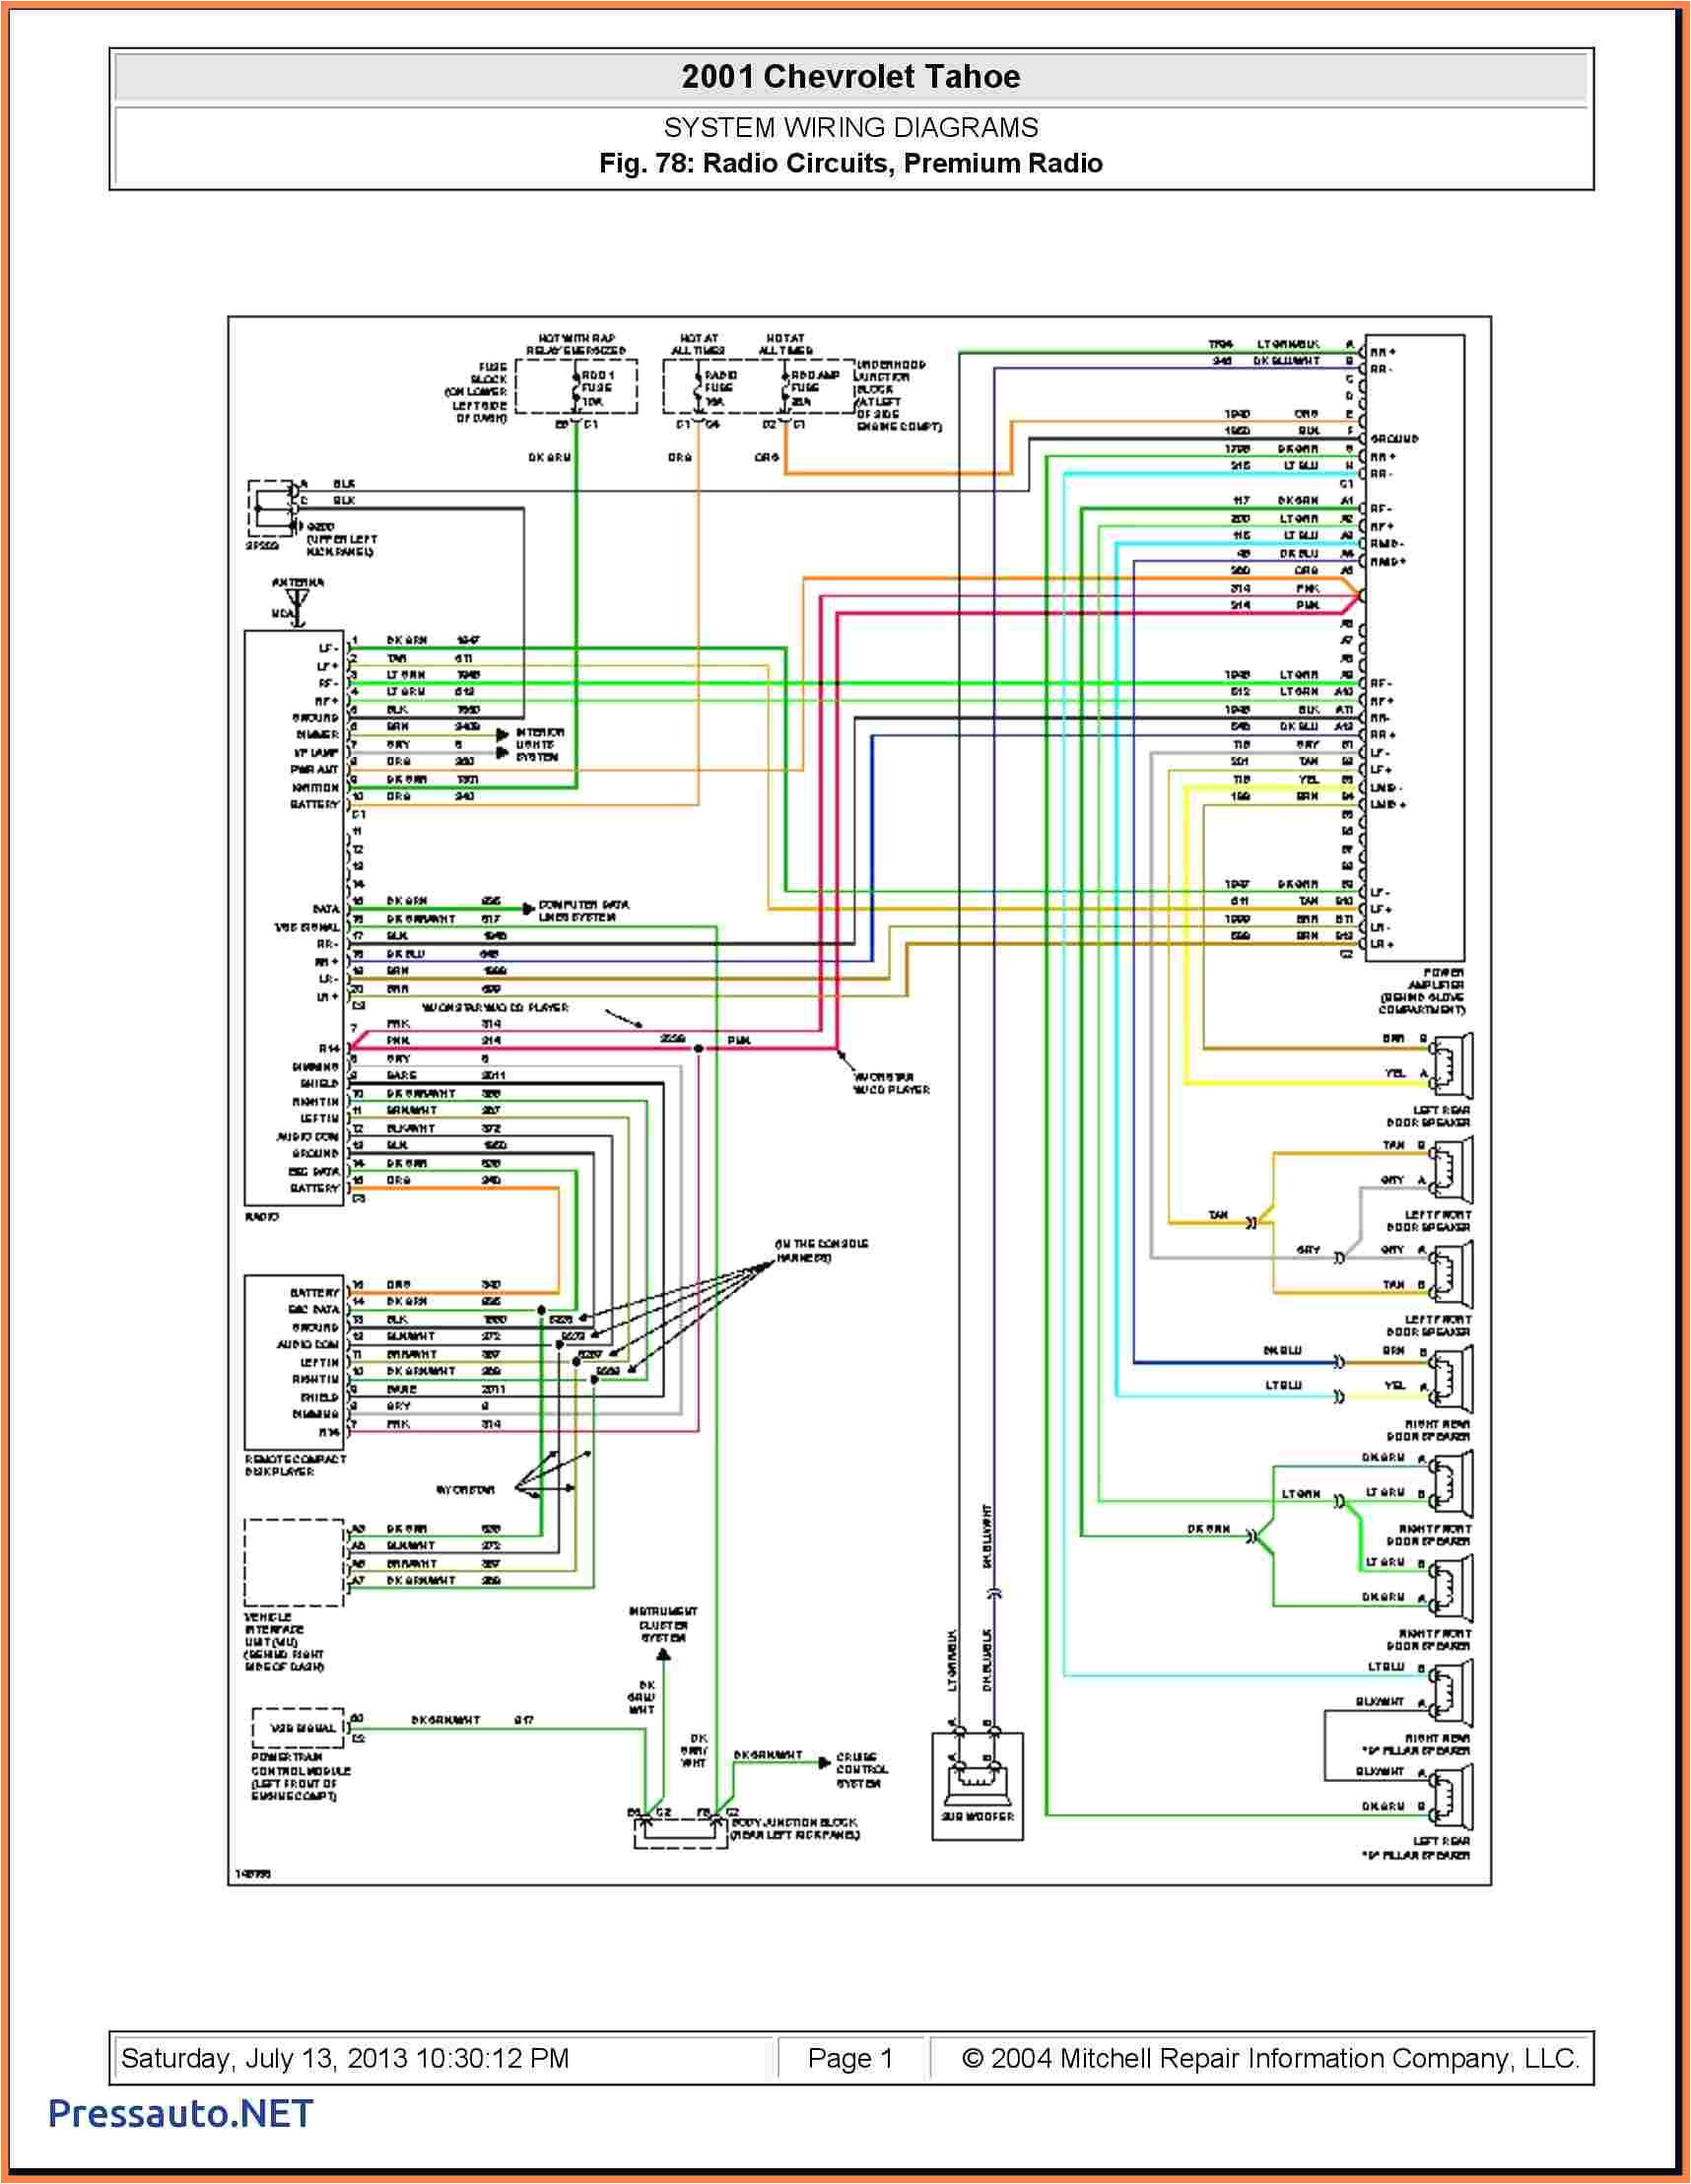 2002 suburban wire harness wiring diagram files 2002 chevy malibu radio wiring harness diagram 2002 chevy wiring harness diagram